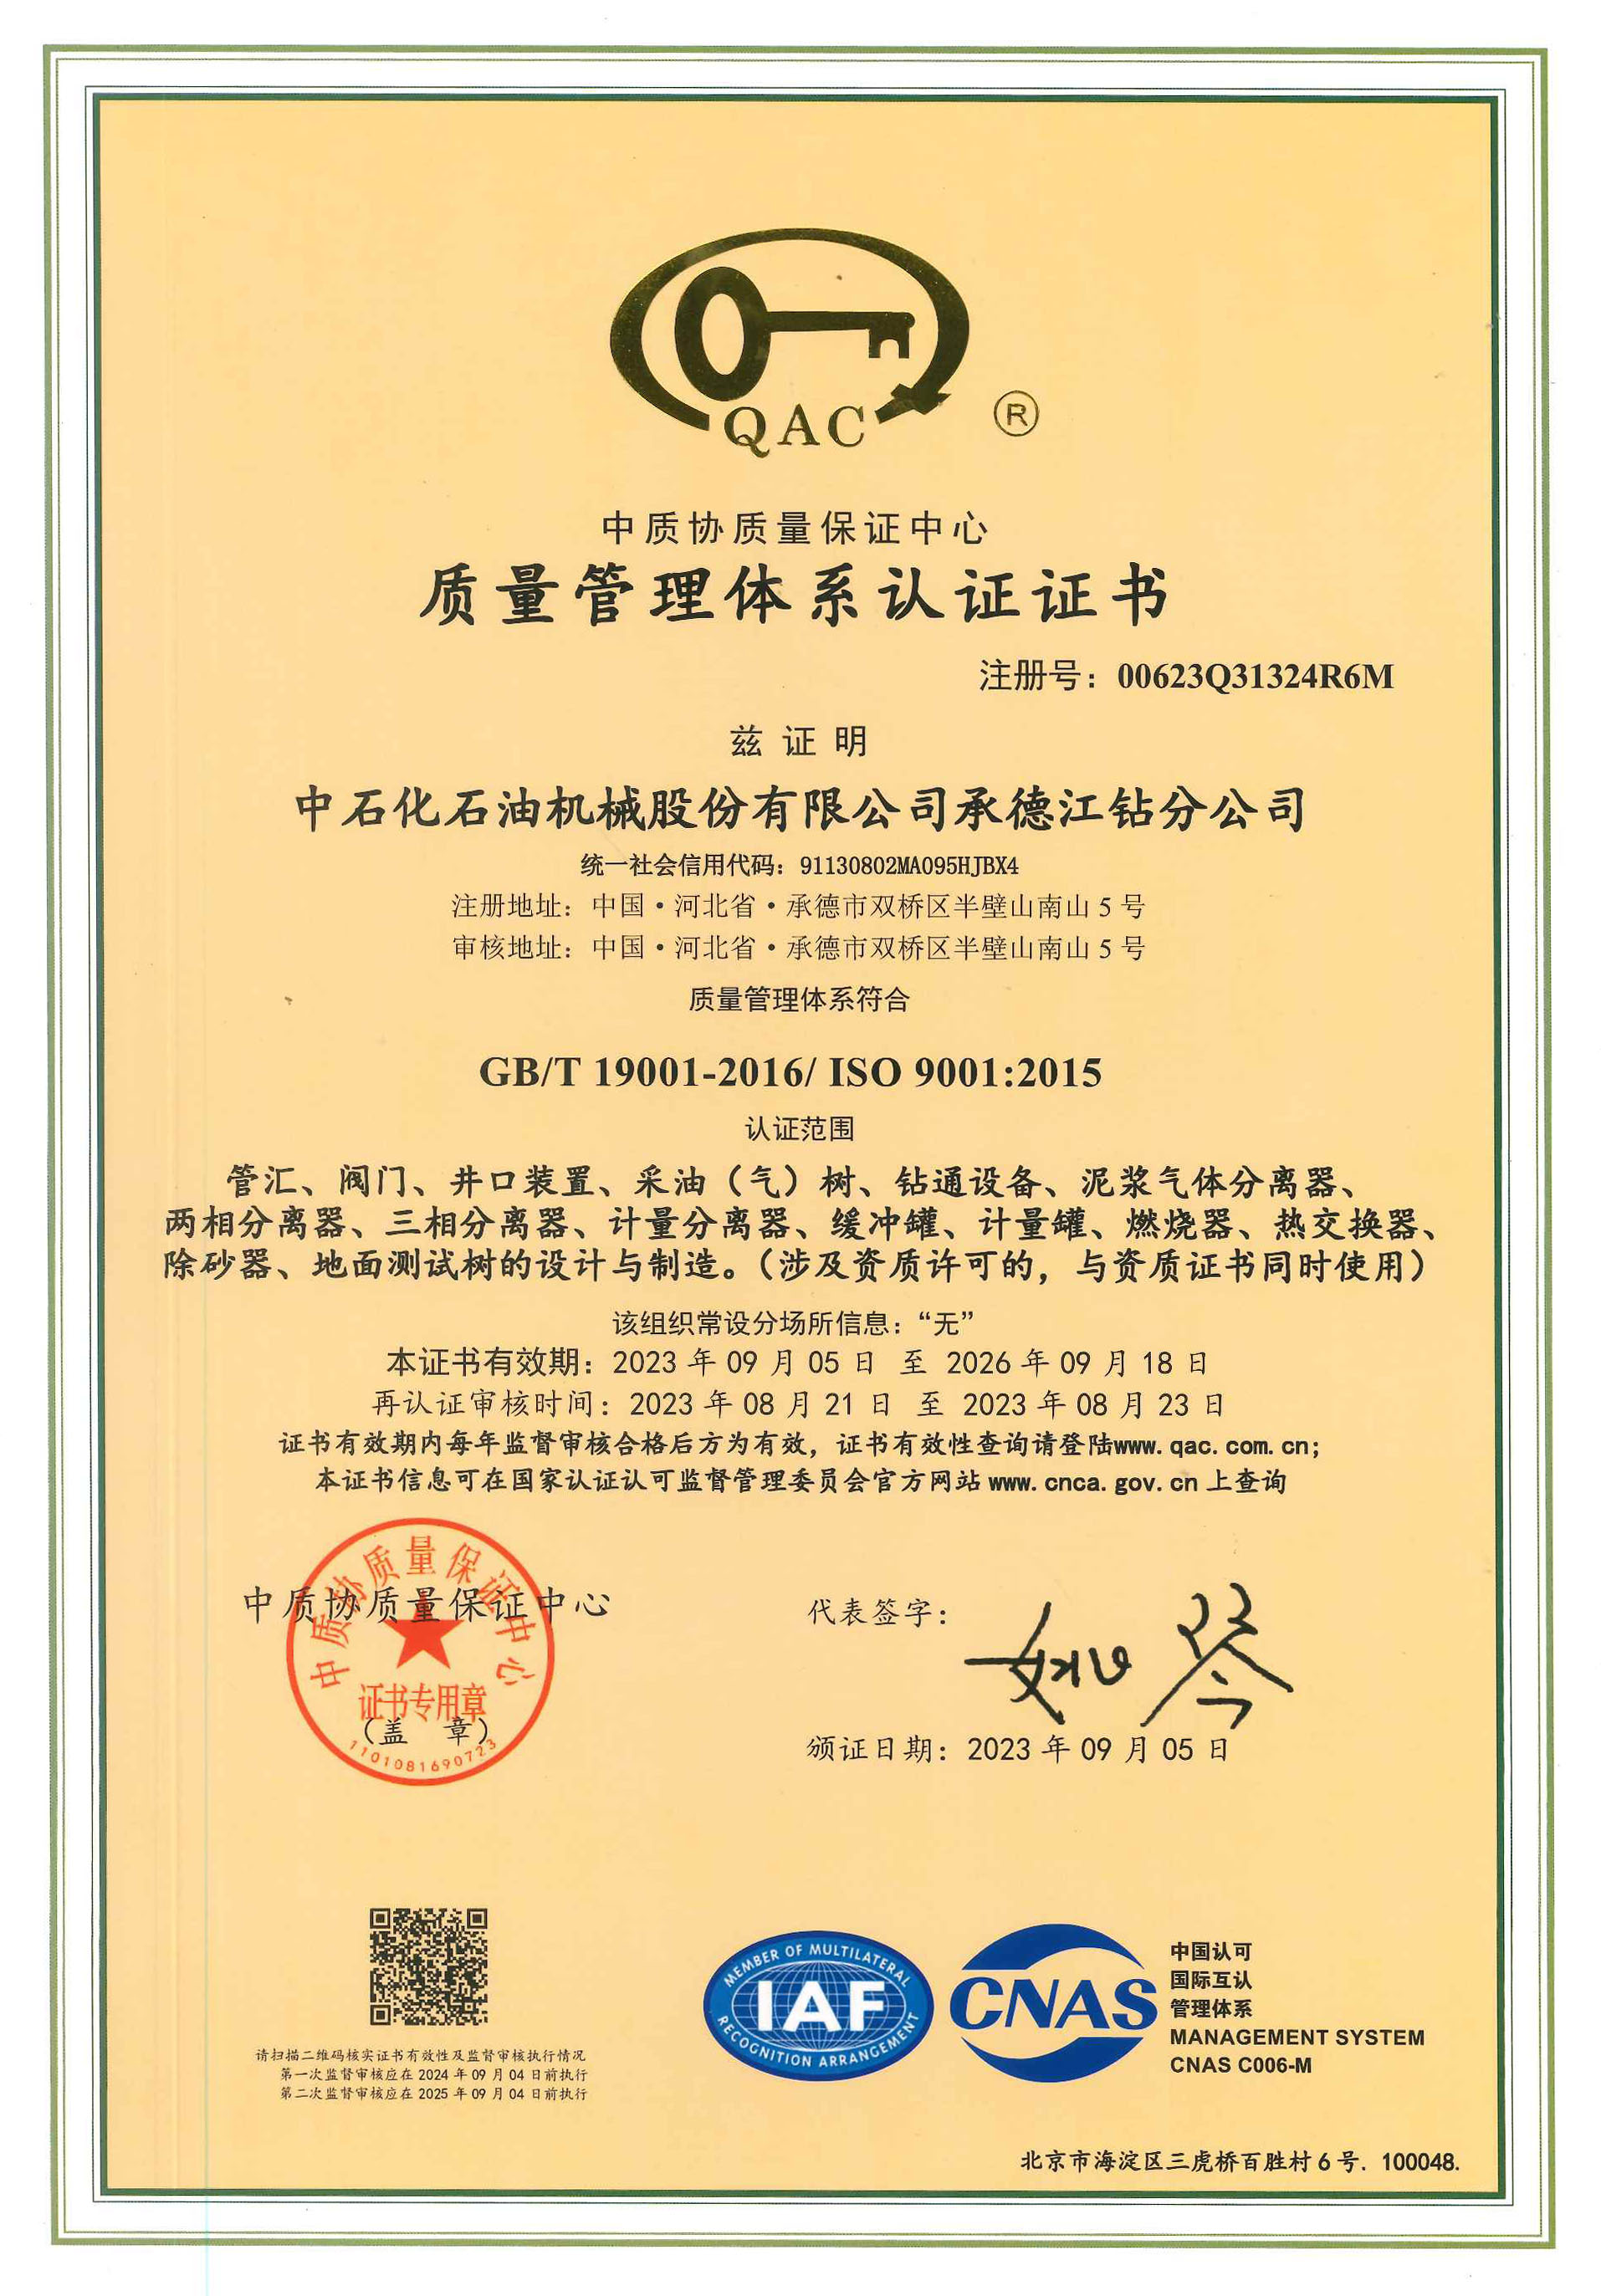 ISO 9001 चीनी (2023fov